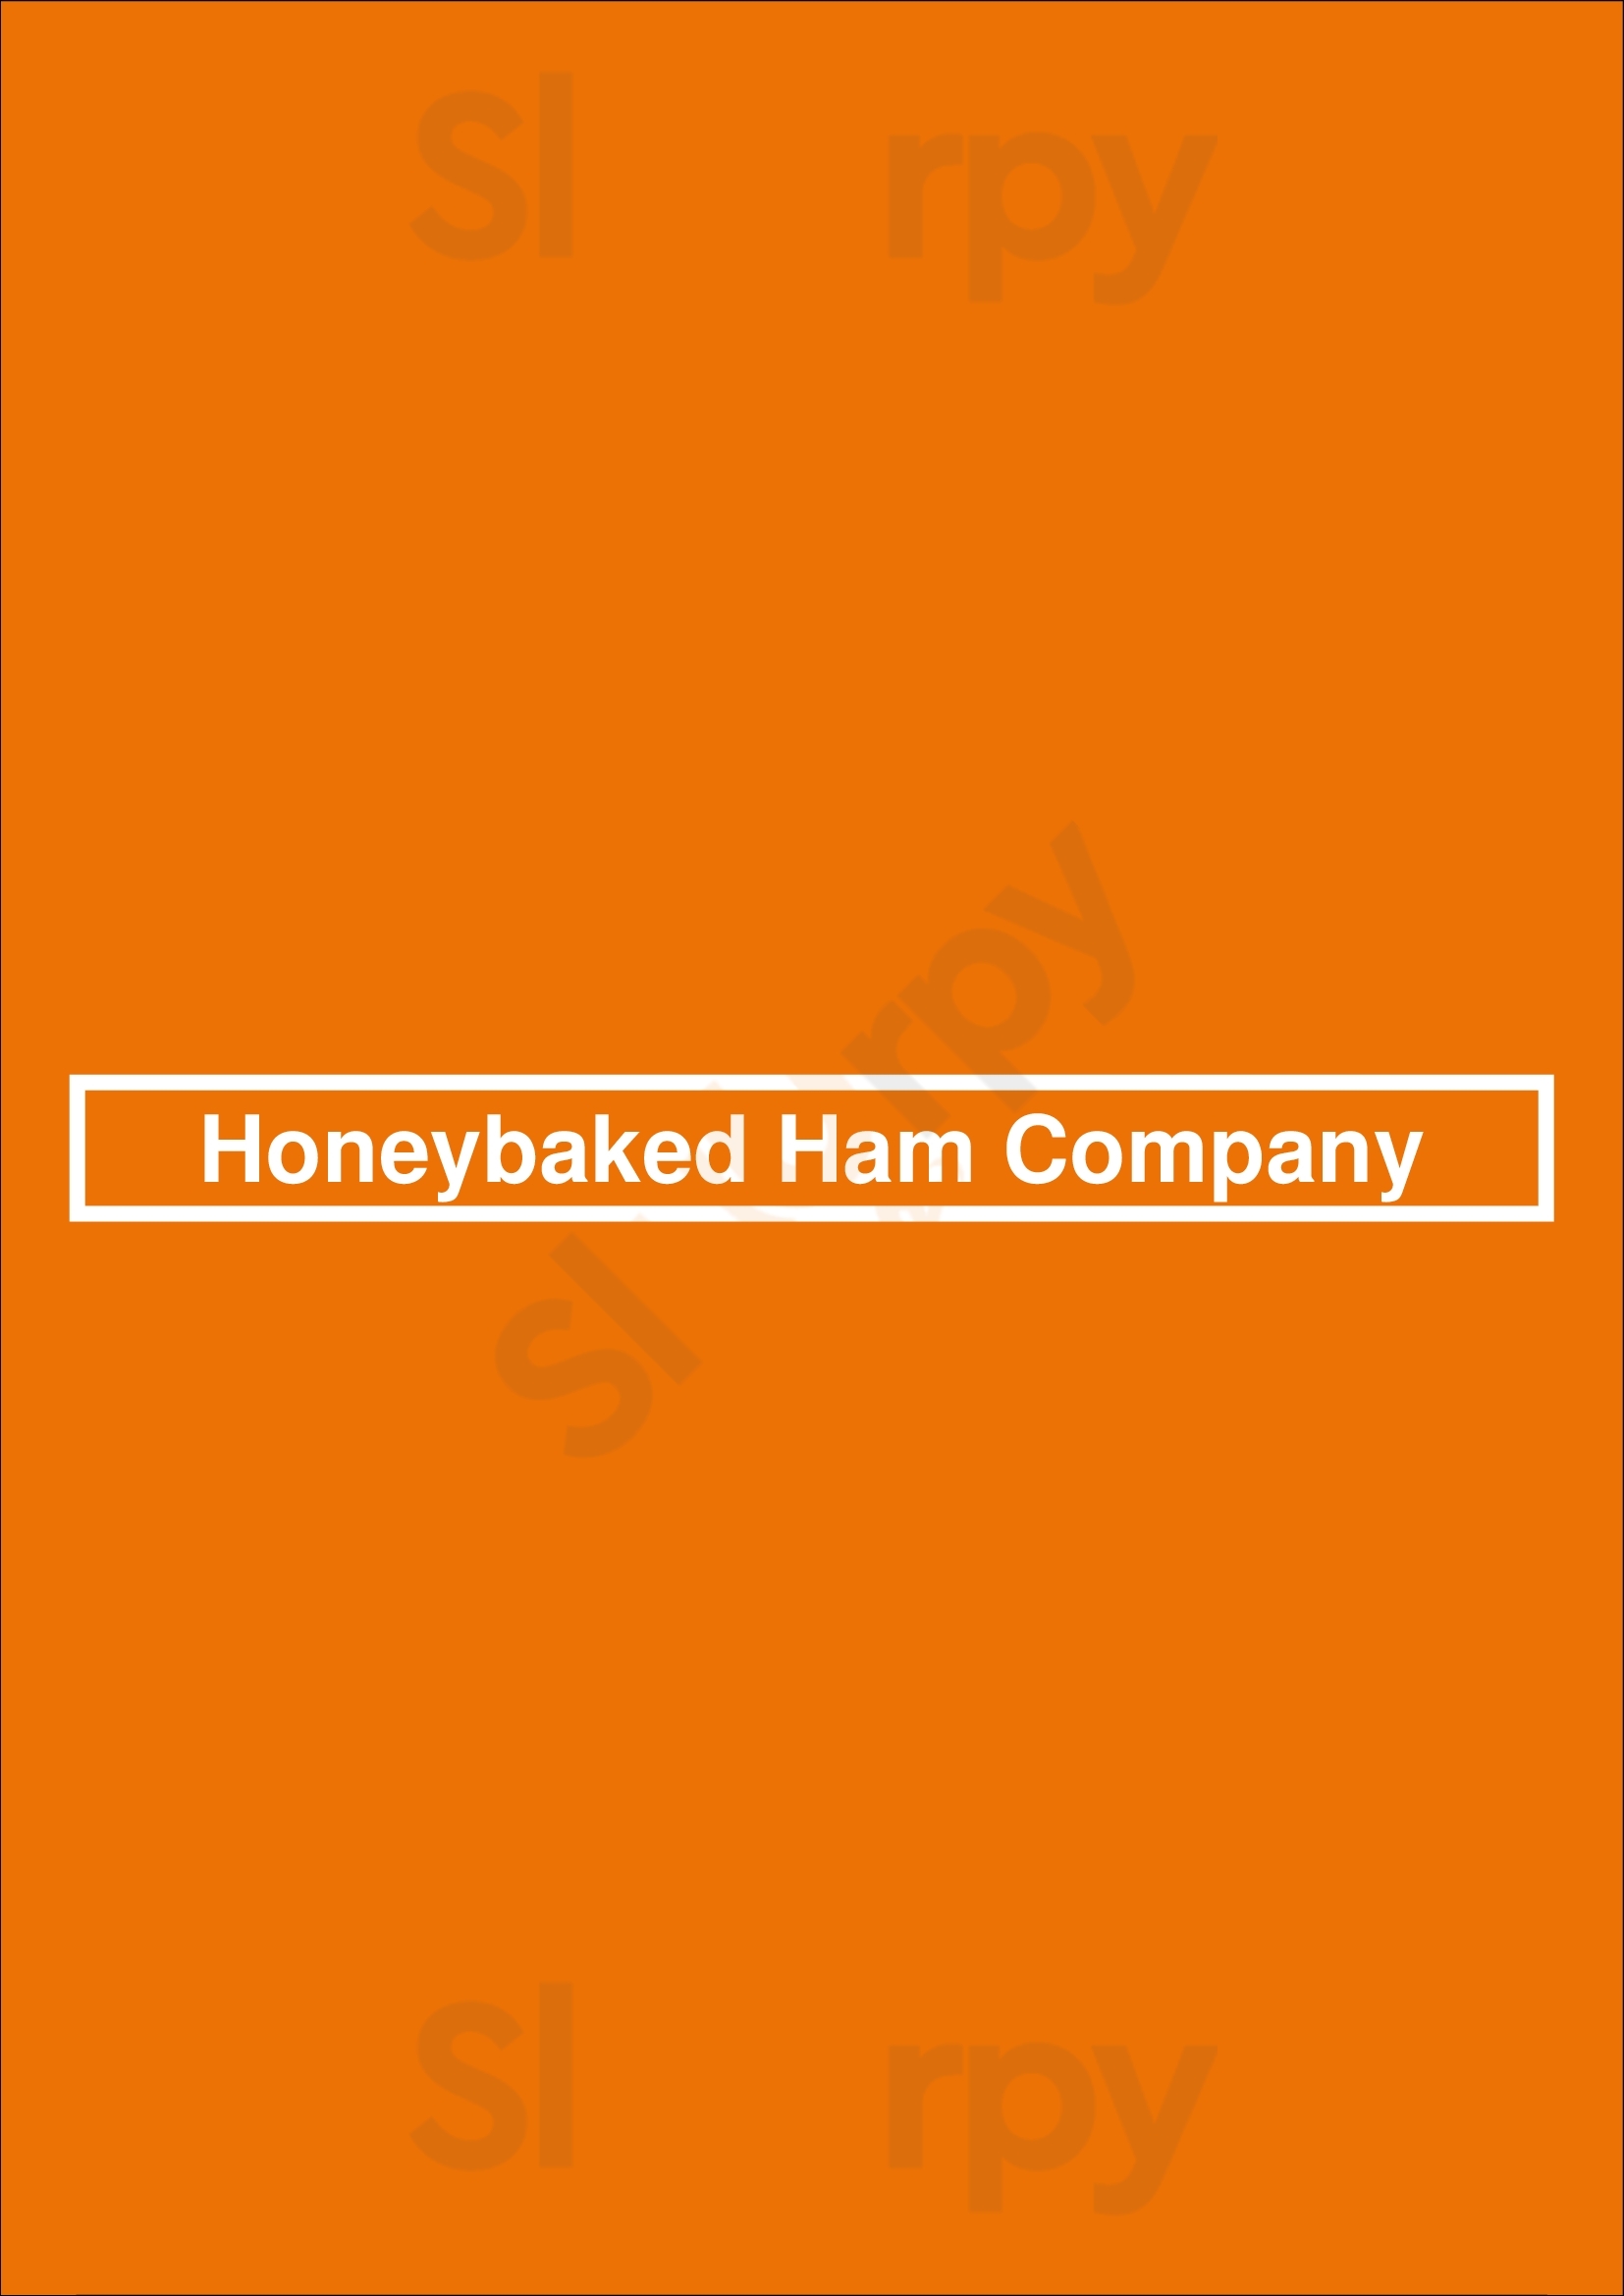 Honeybaked Ham Company Lake Worth Menu - 1